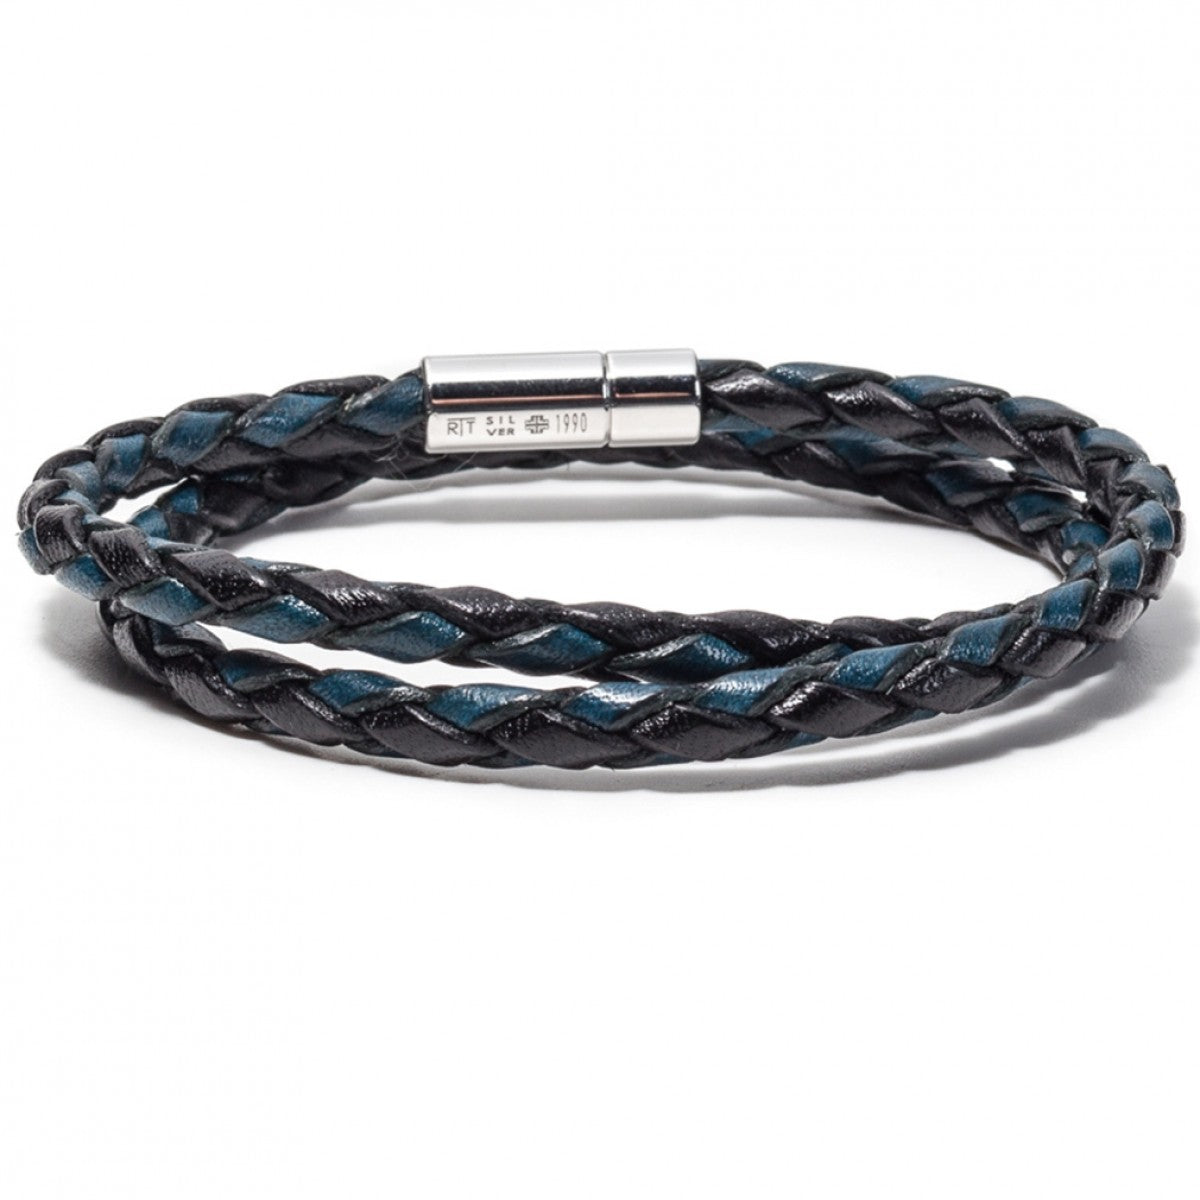 Tateossian Men's Pop Scoubidou Bracelet with Silver Clasp, Blue and Black, Length 41 CM